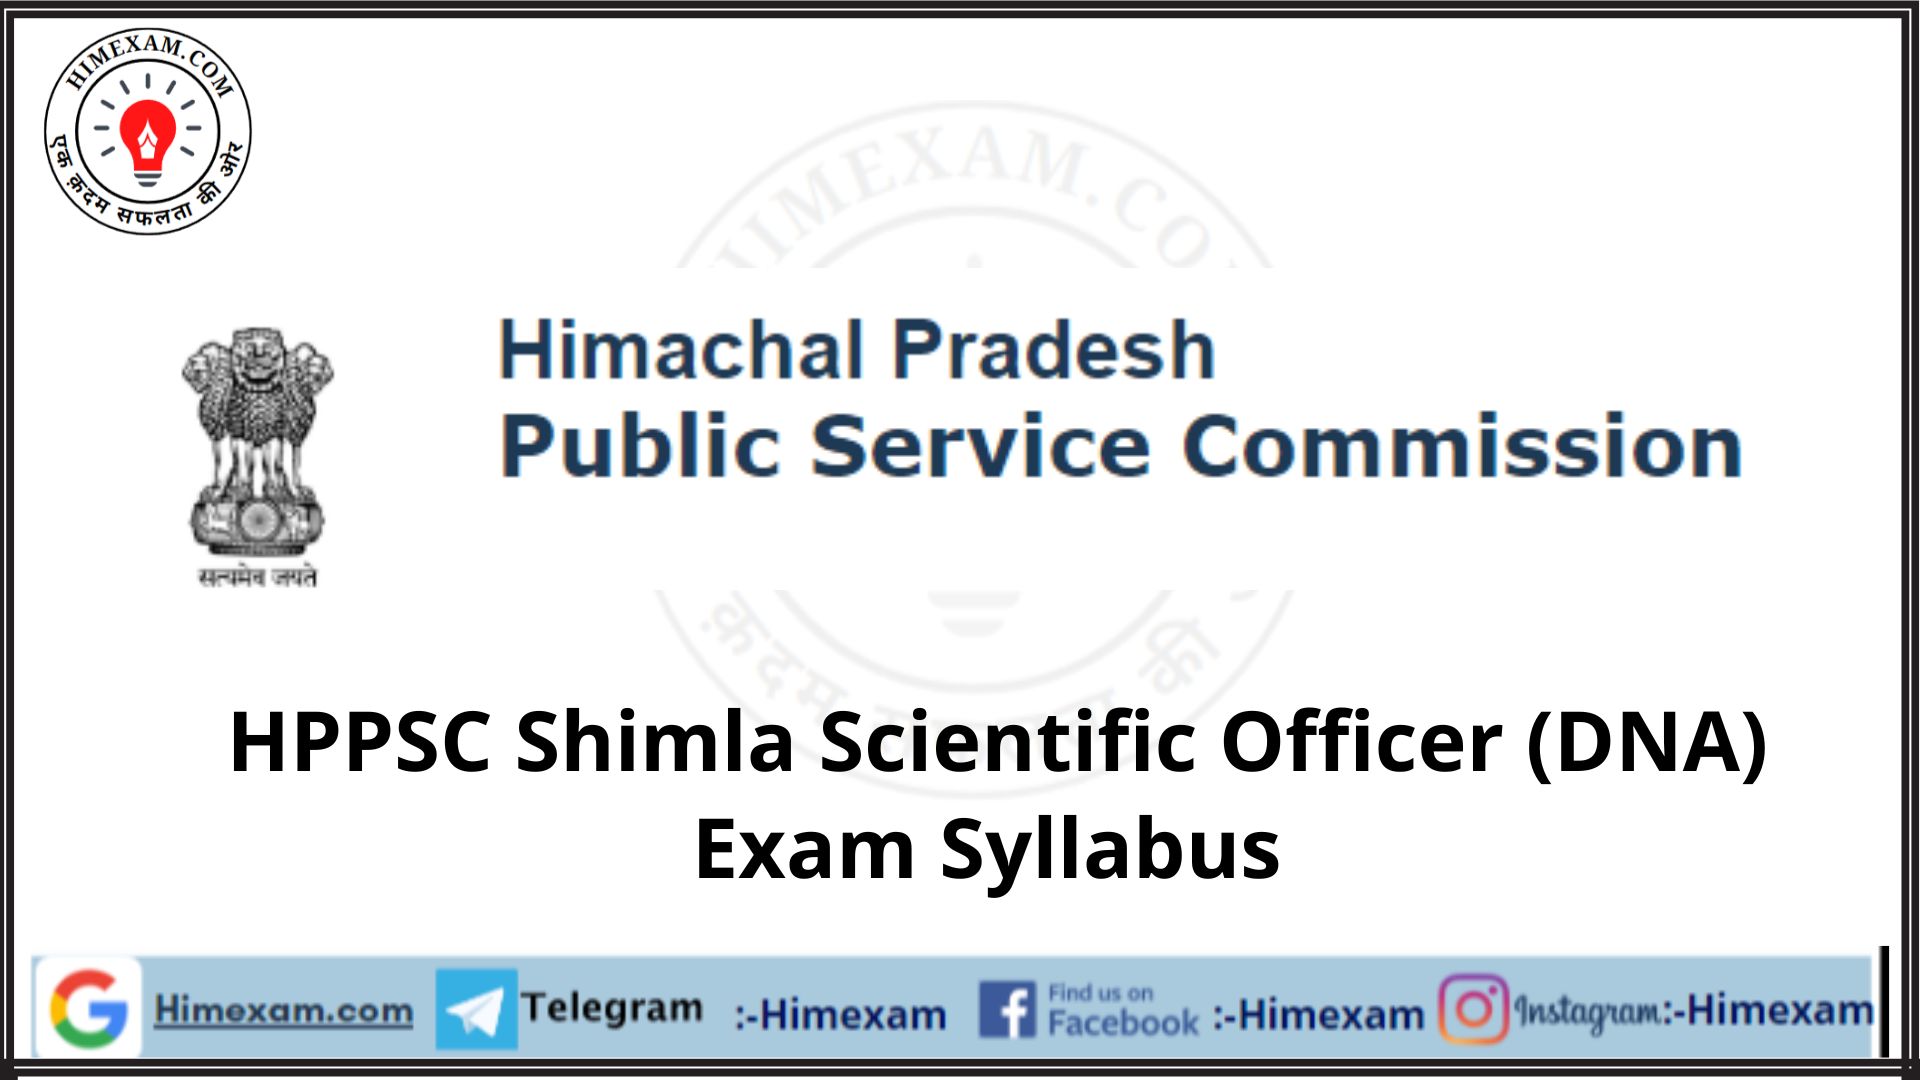 HPPSC Shimla Scientific Officer (DNA) Exam Syllabus